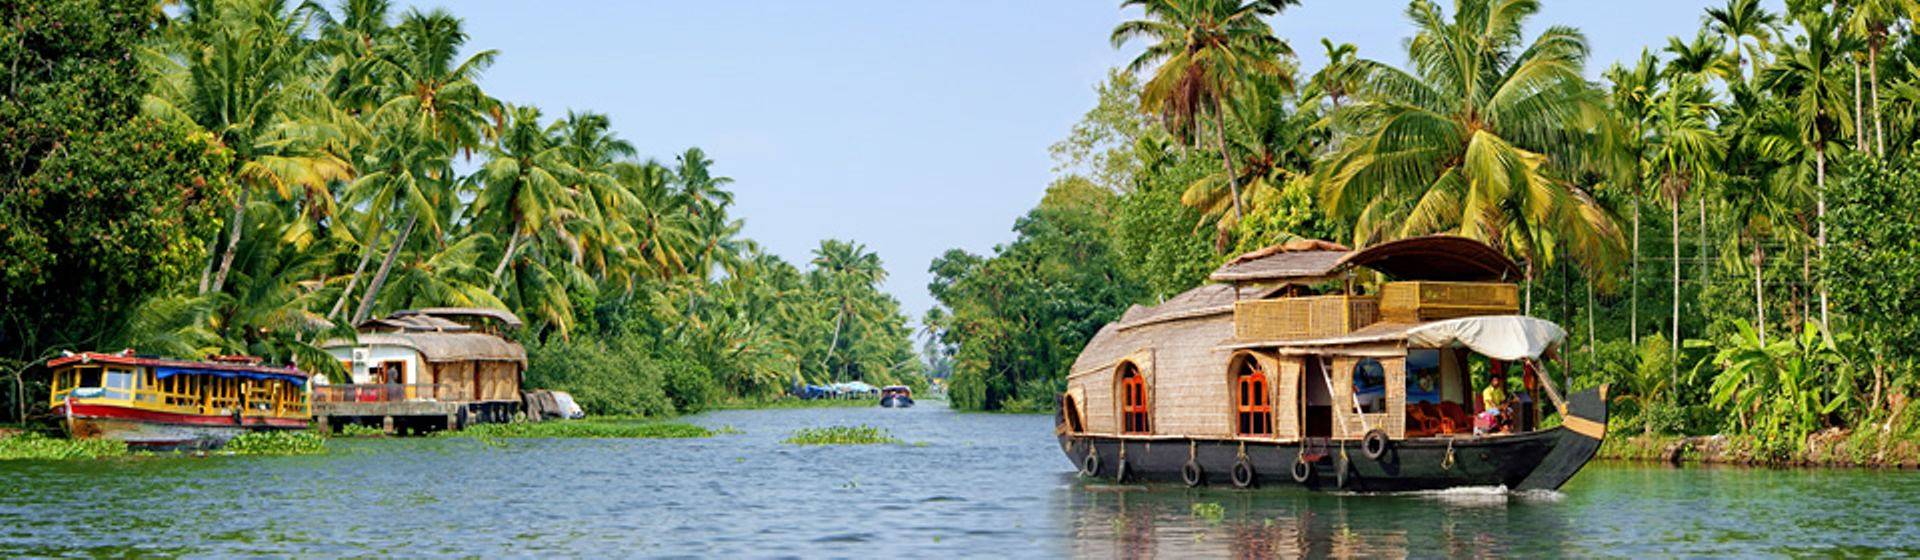 Holidays to Kerala Image